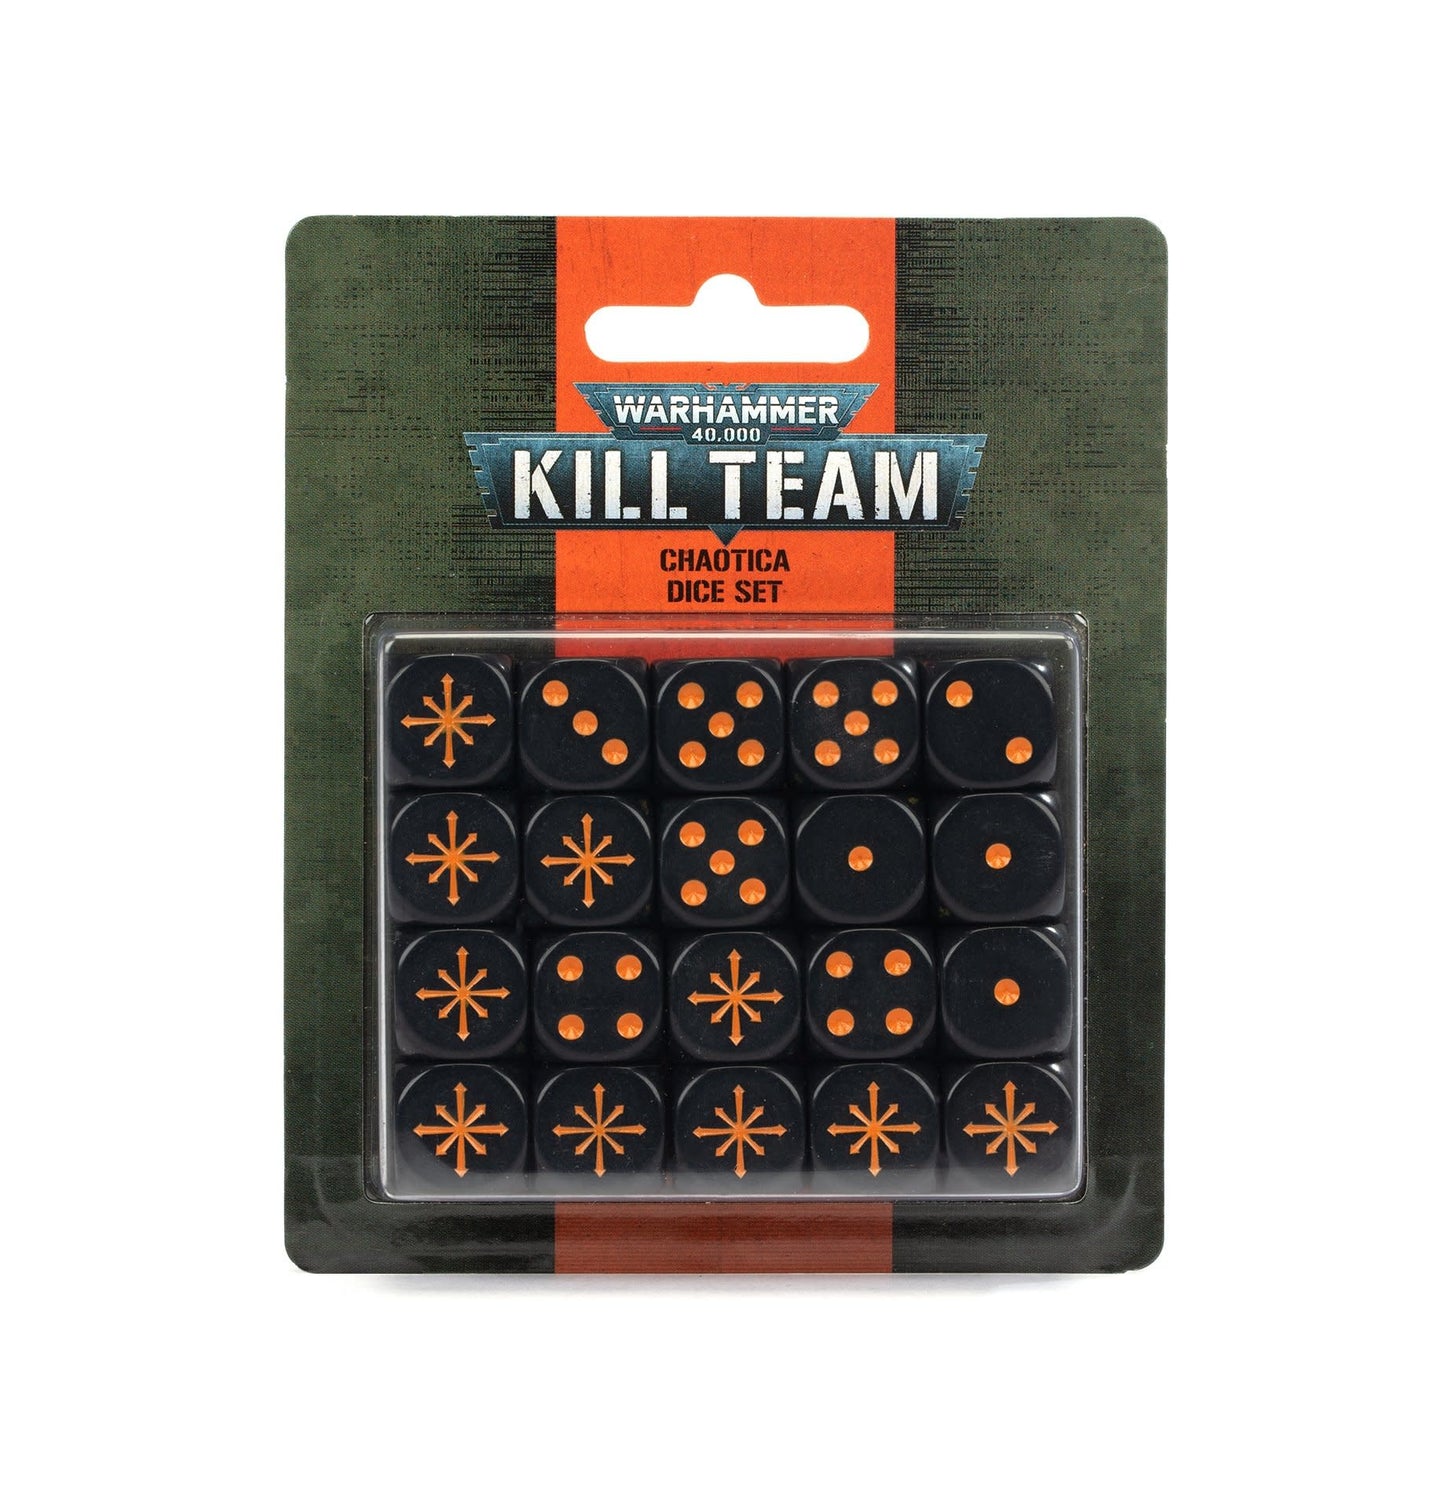 Kill Team Chaotica: Dice Set